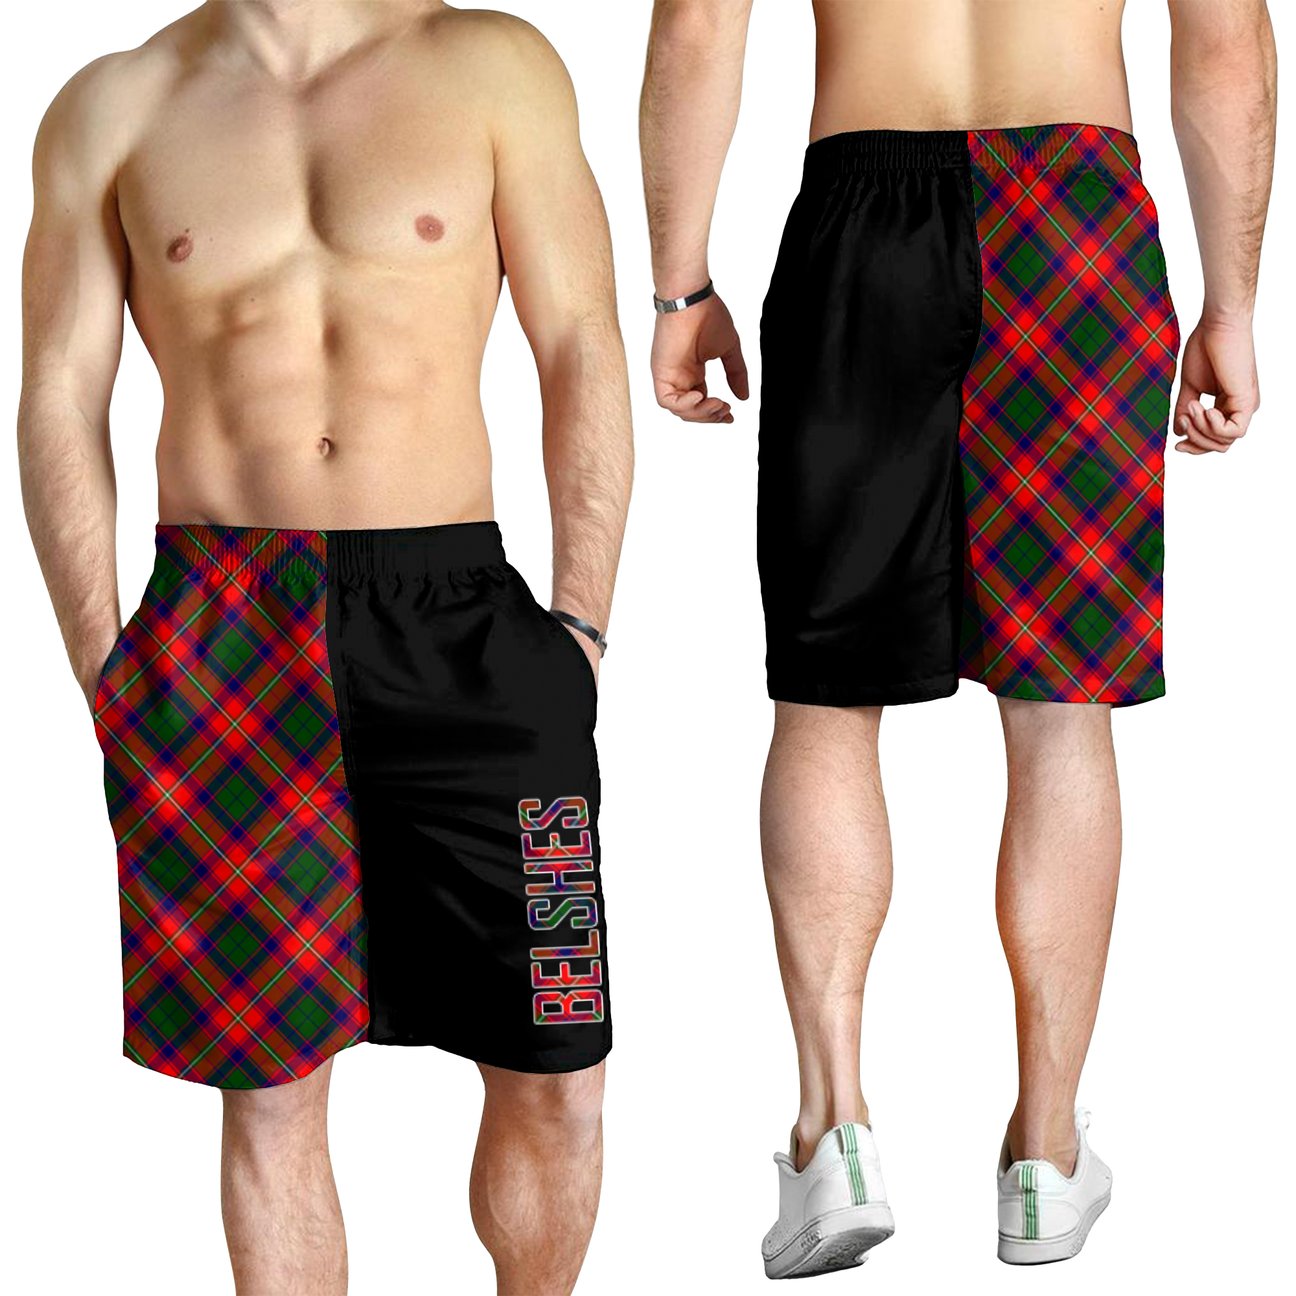 Belshes Tartan Crest Men's Short - Cross Style